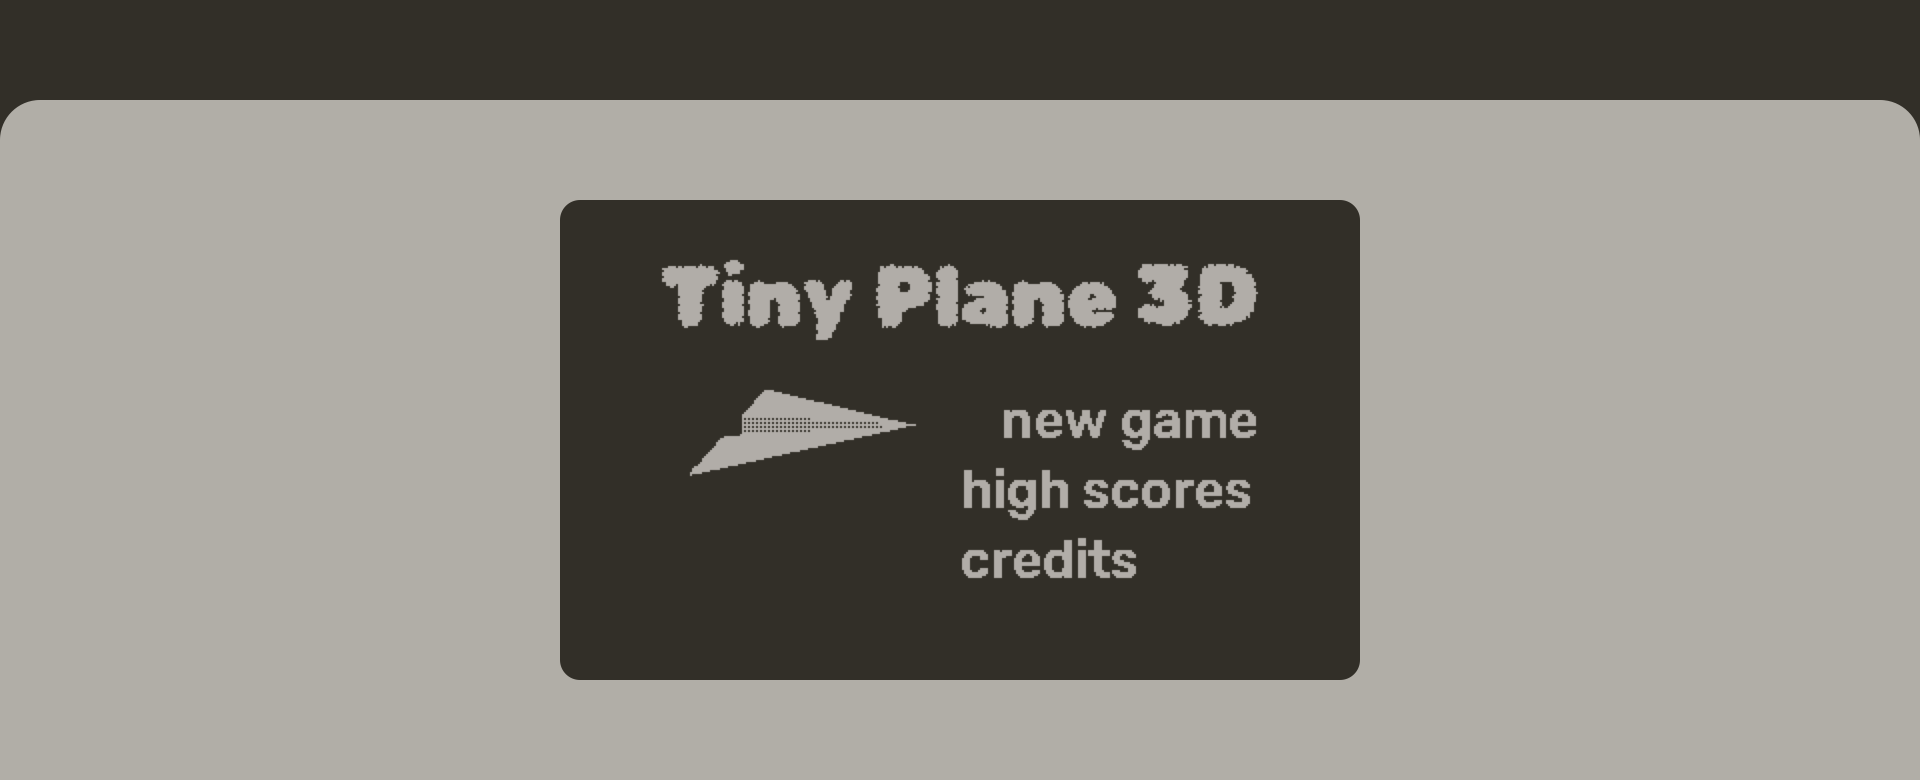 Tiny Plane 3D